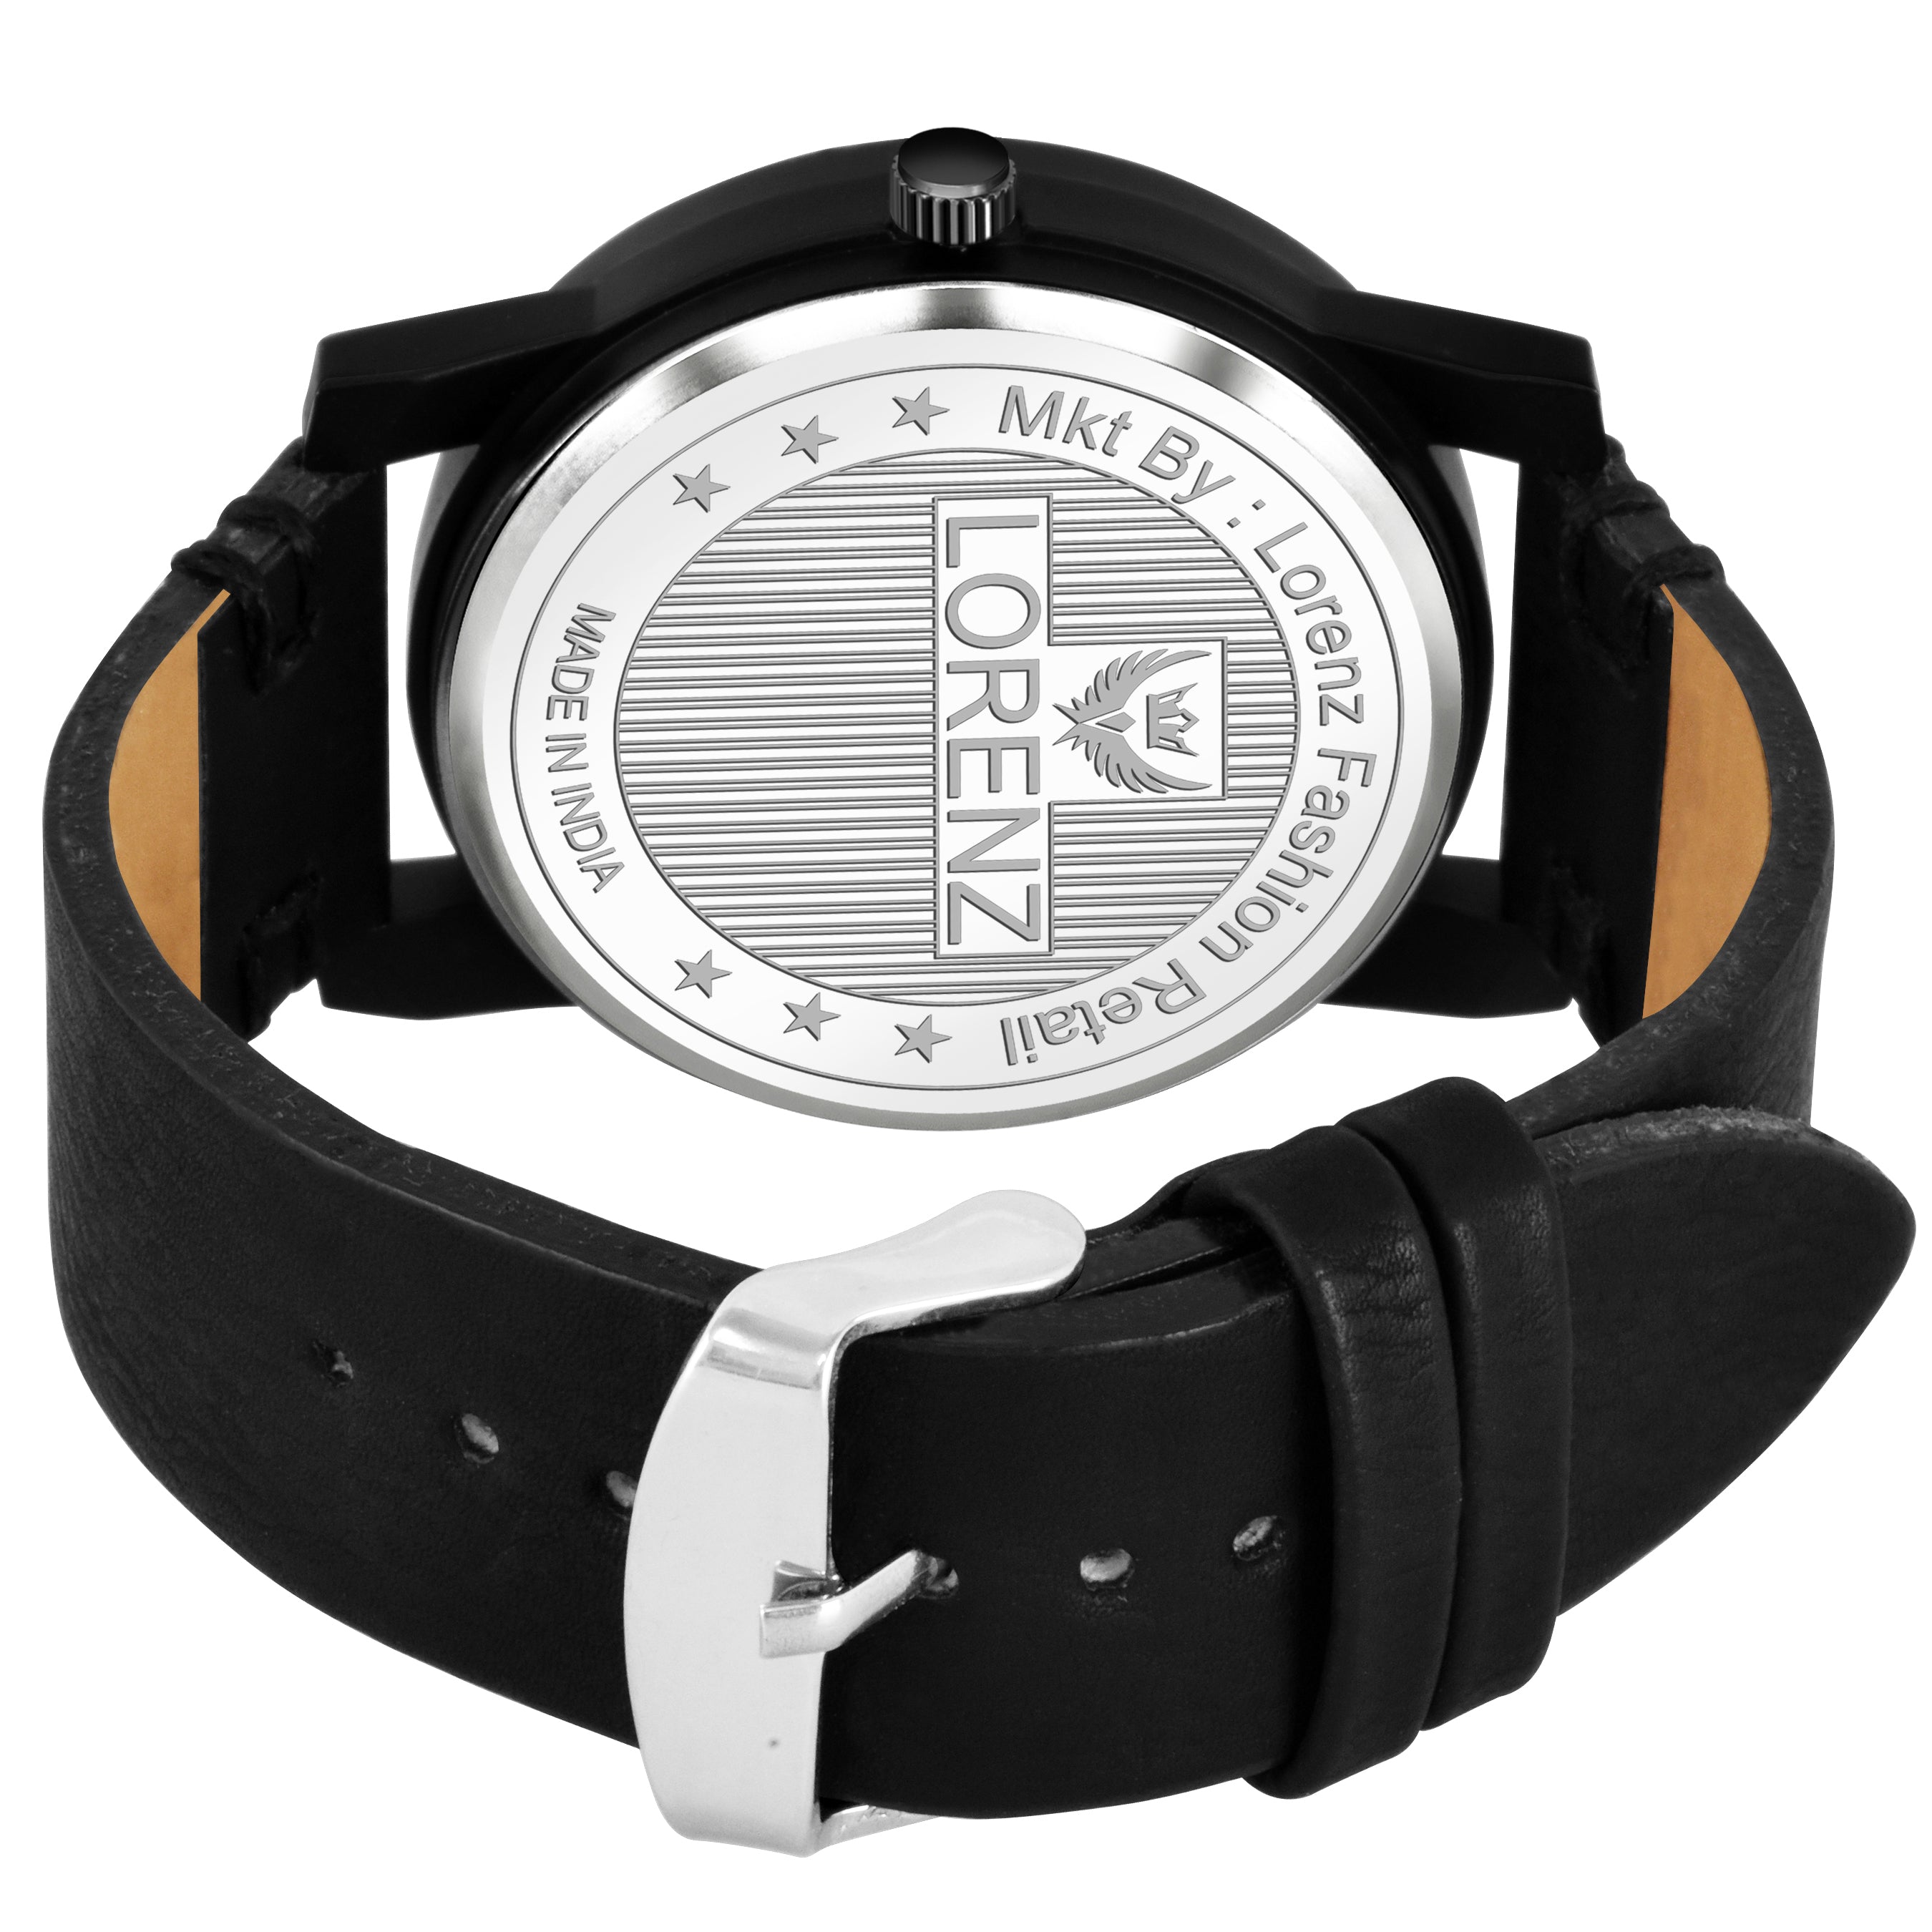 Lorenz Combo of Black Dial Watch & Black Wallet for Men- CM-3071WL-33